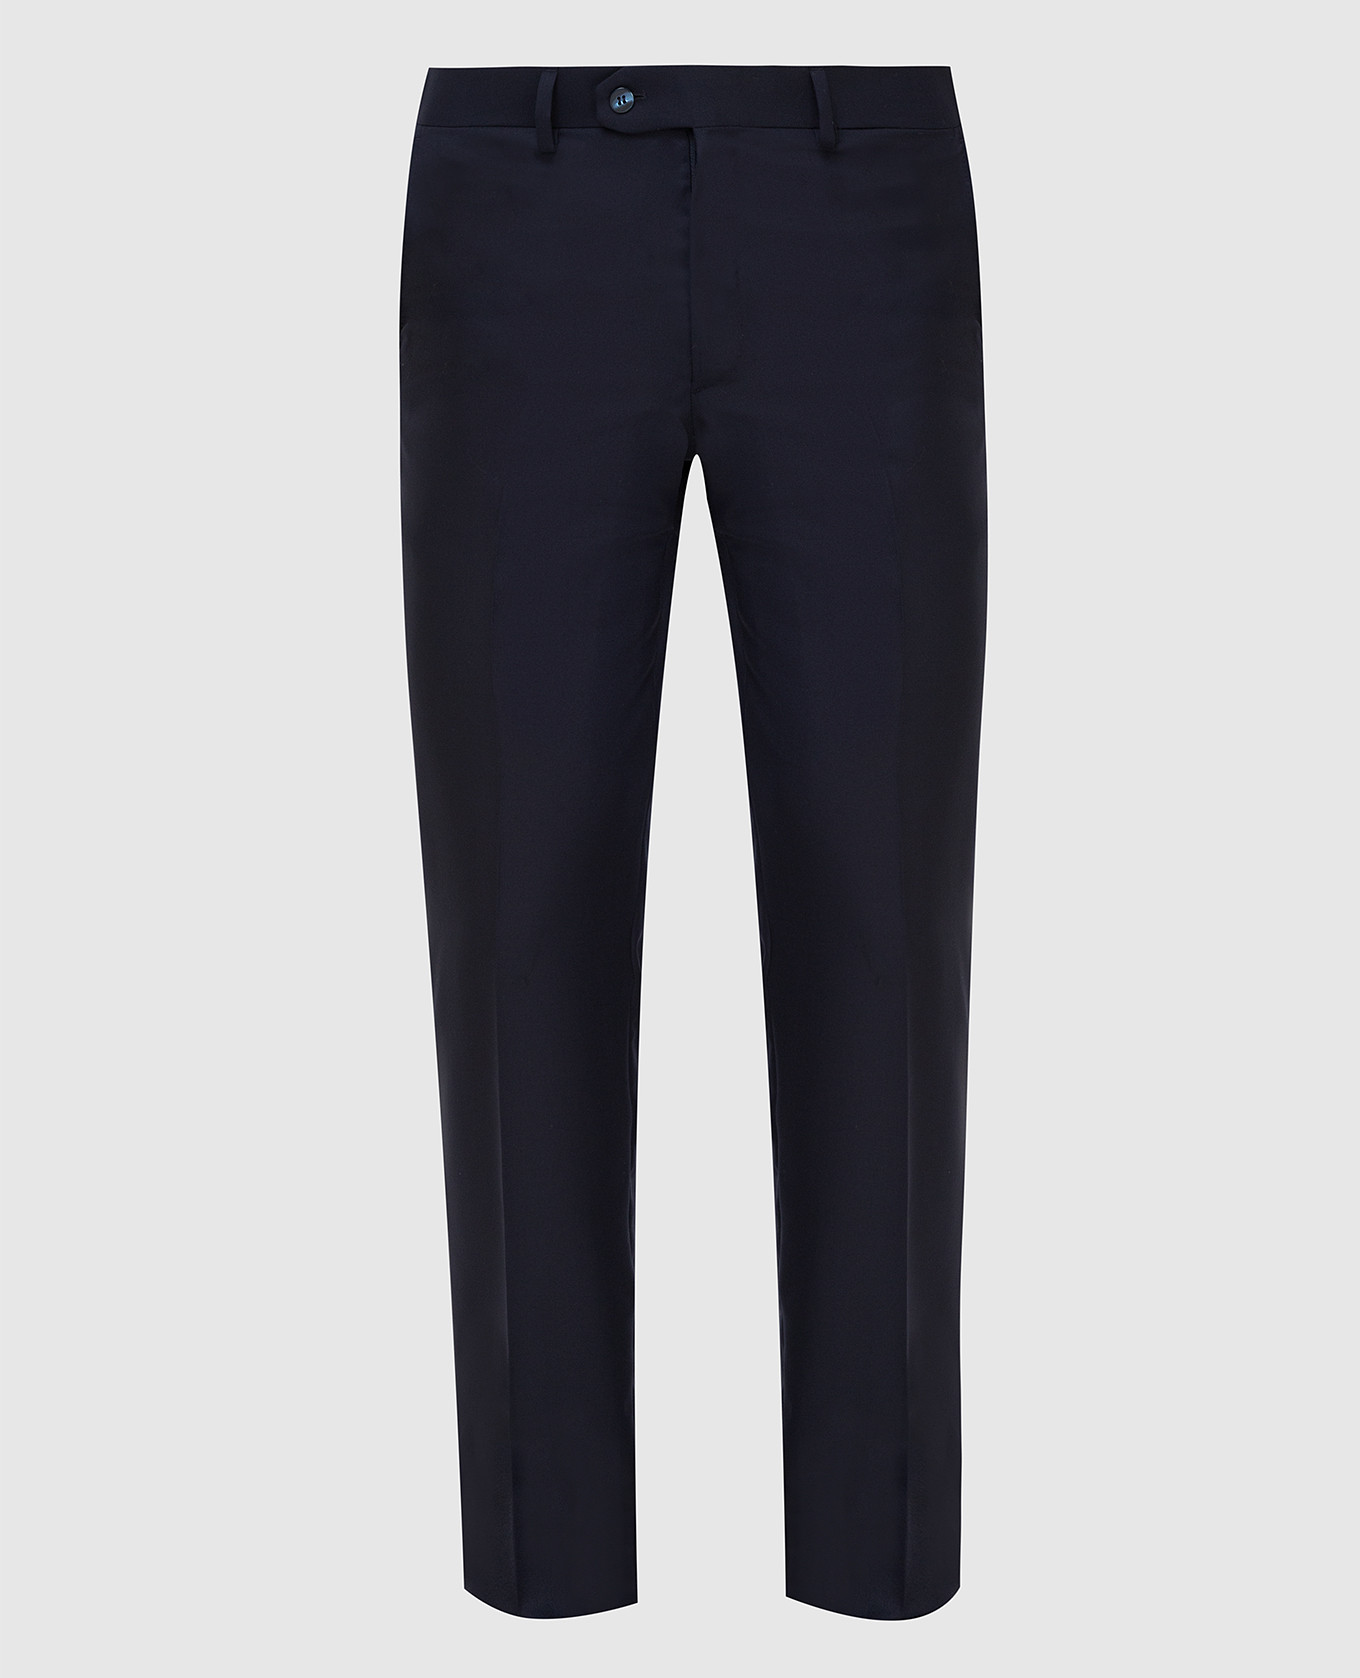 Navy blue wool trousers